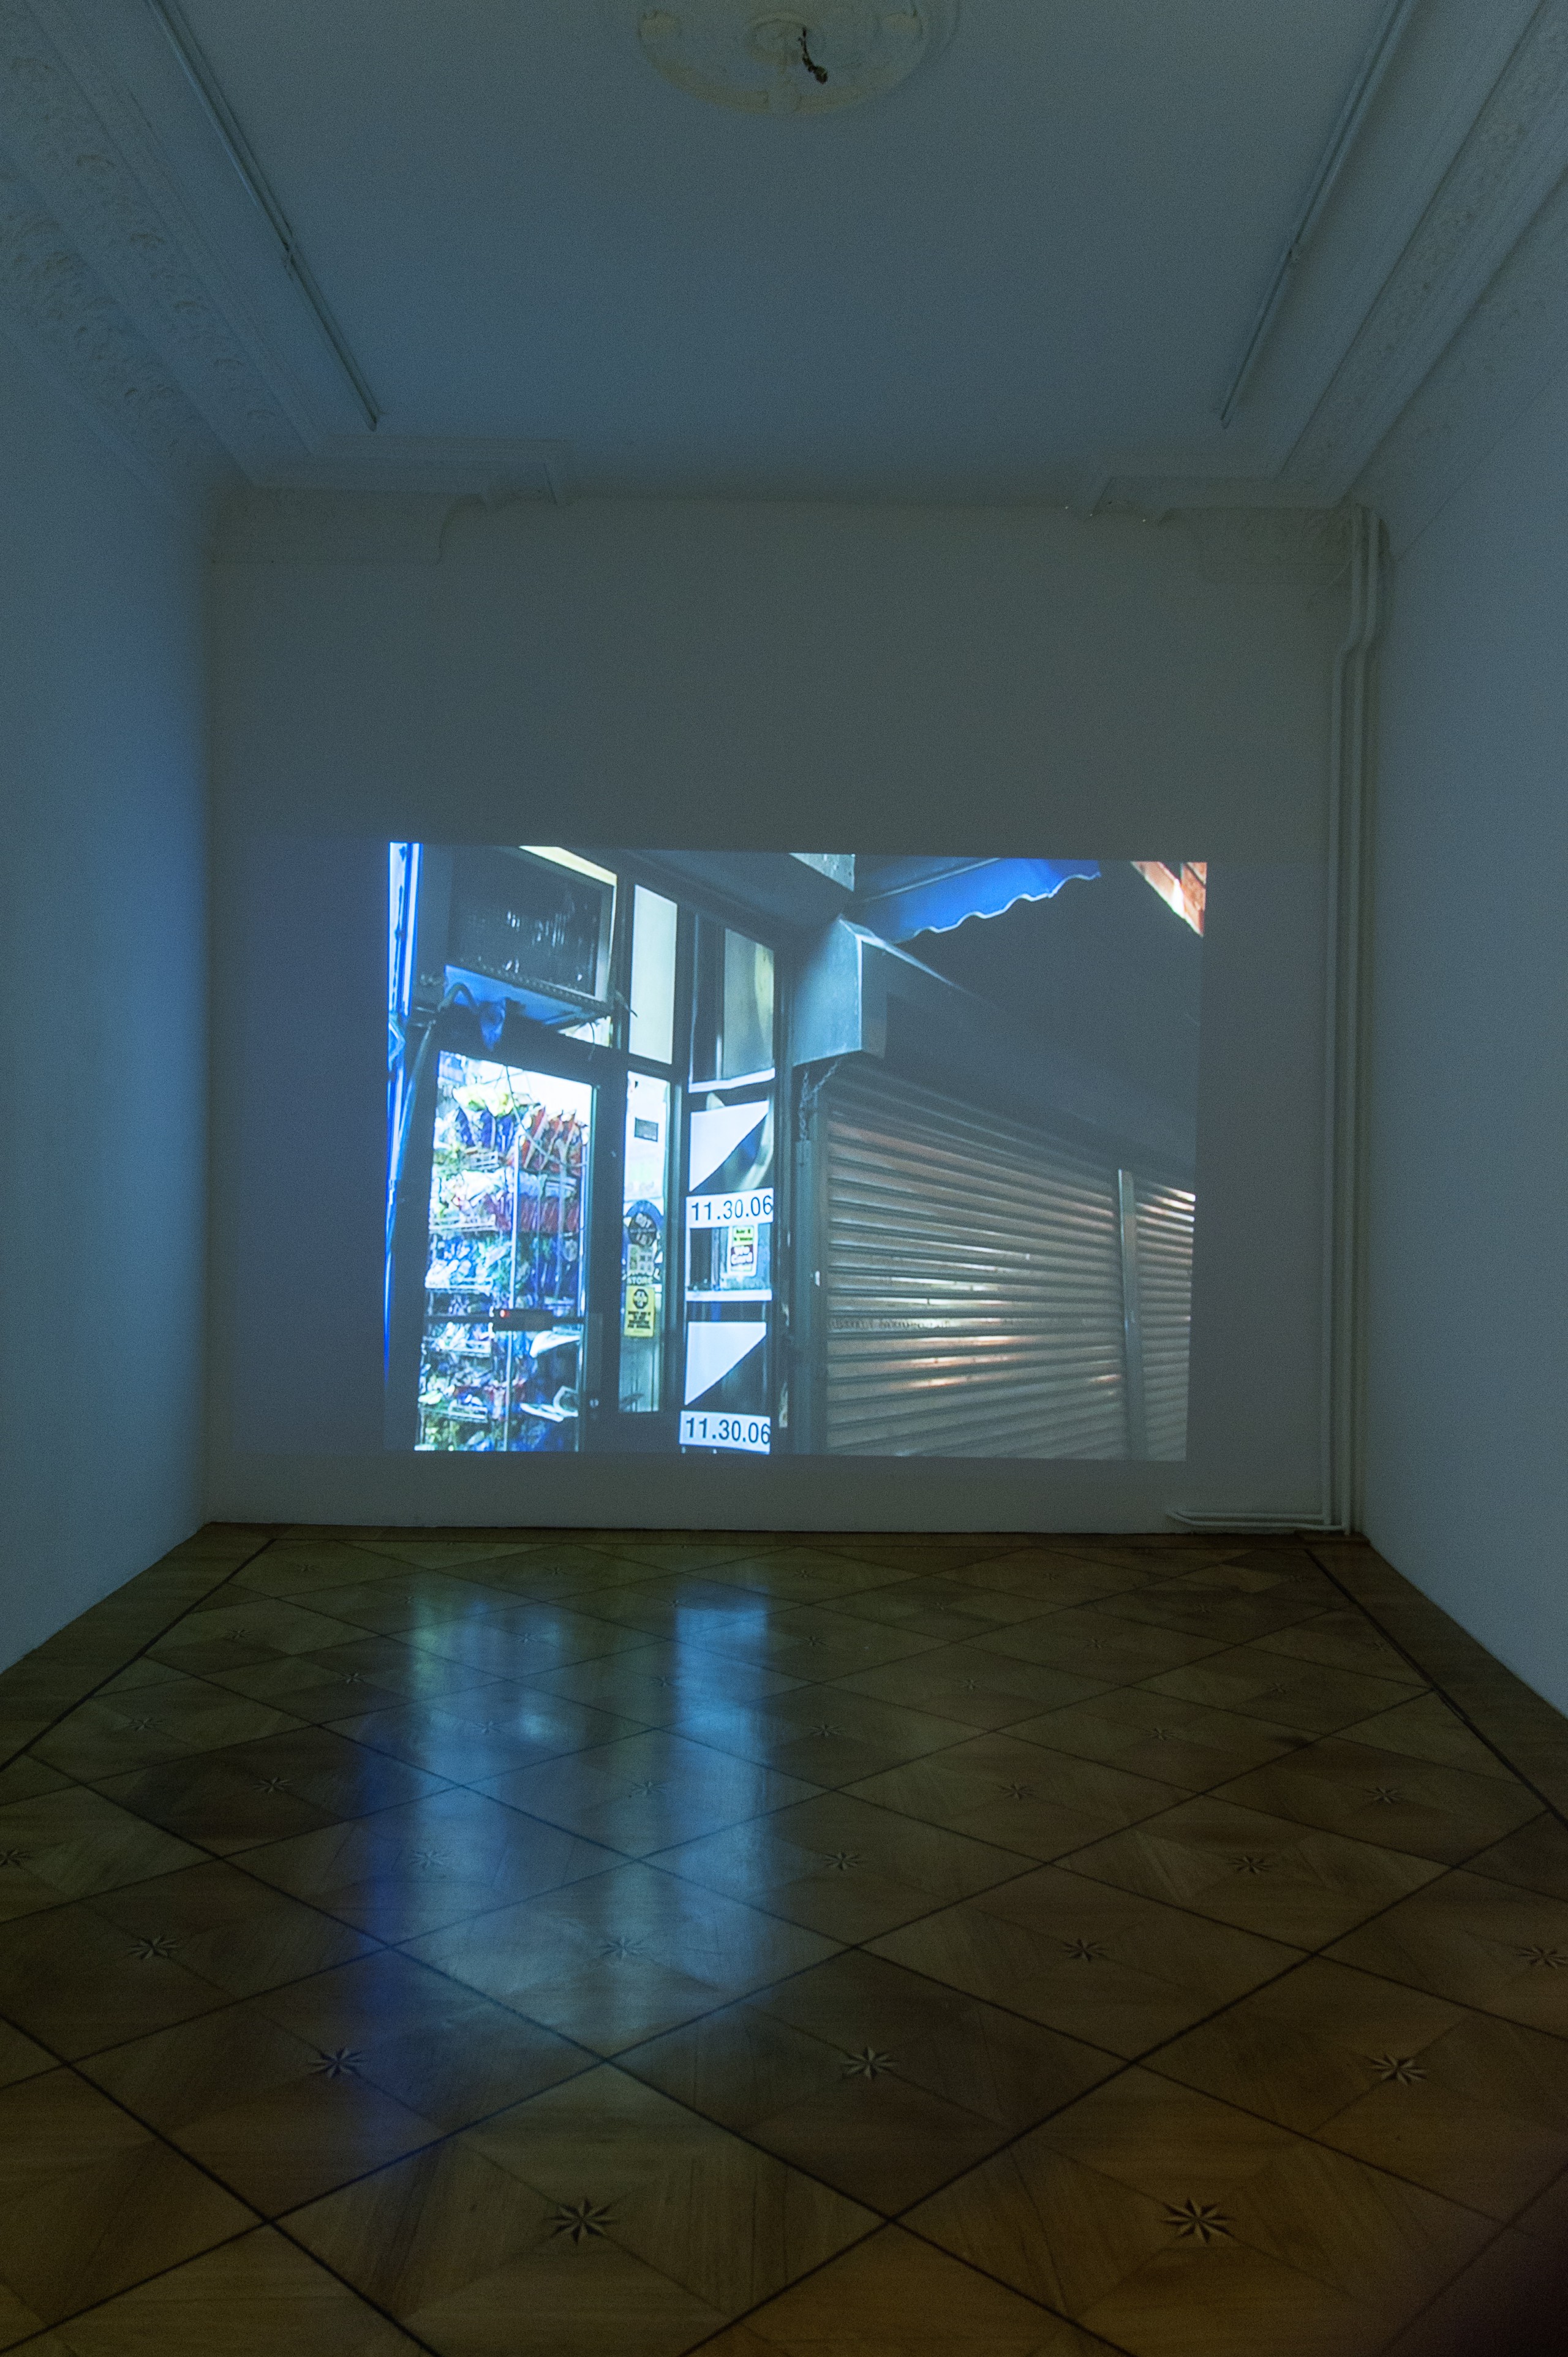 Installation view, Untitled ‘12, Société, Berlin, 2012